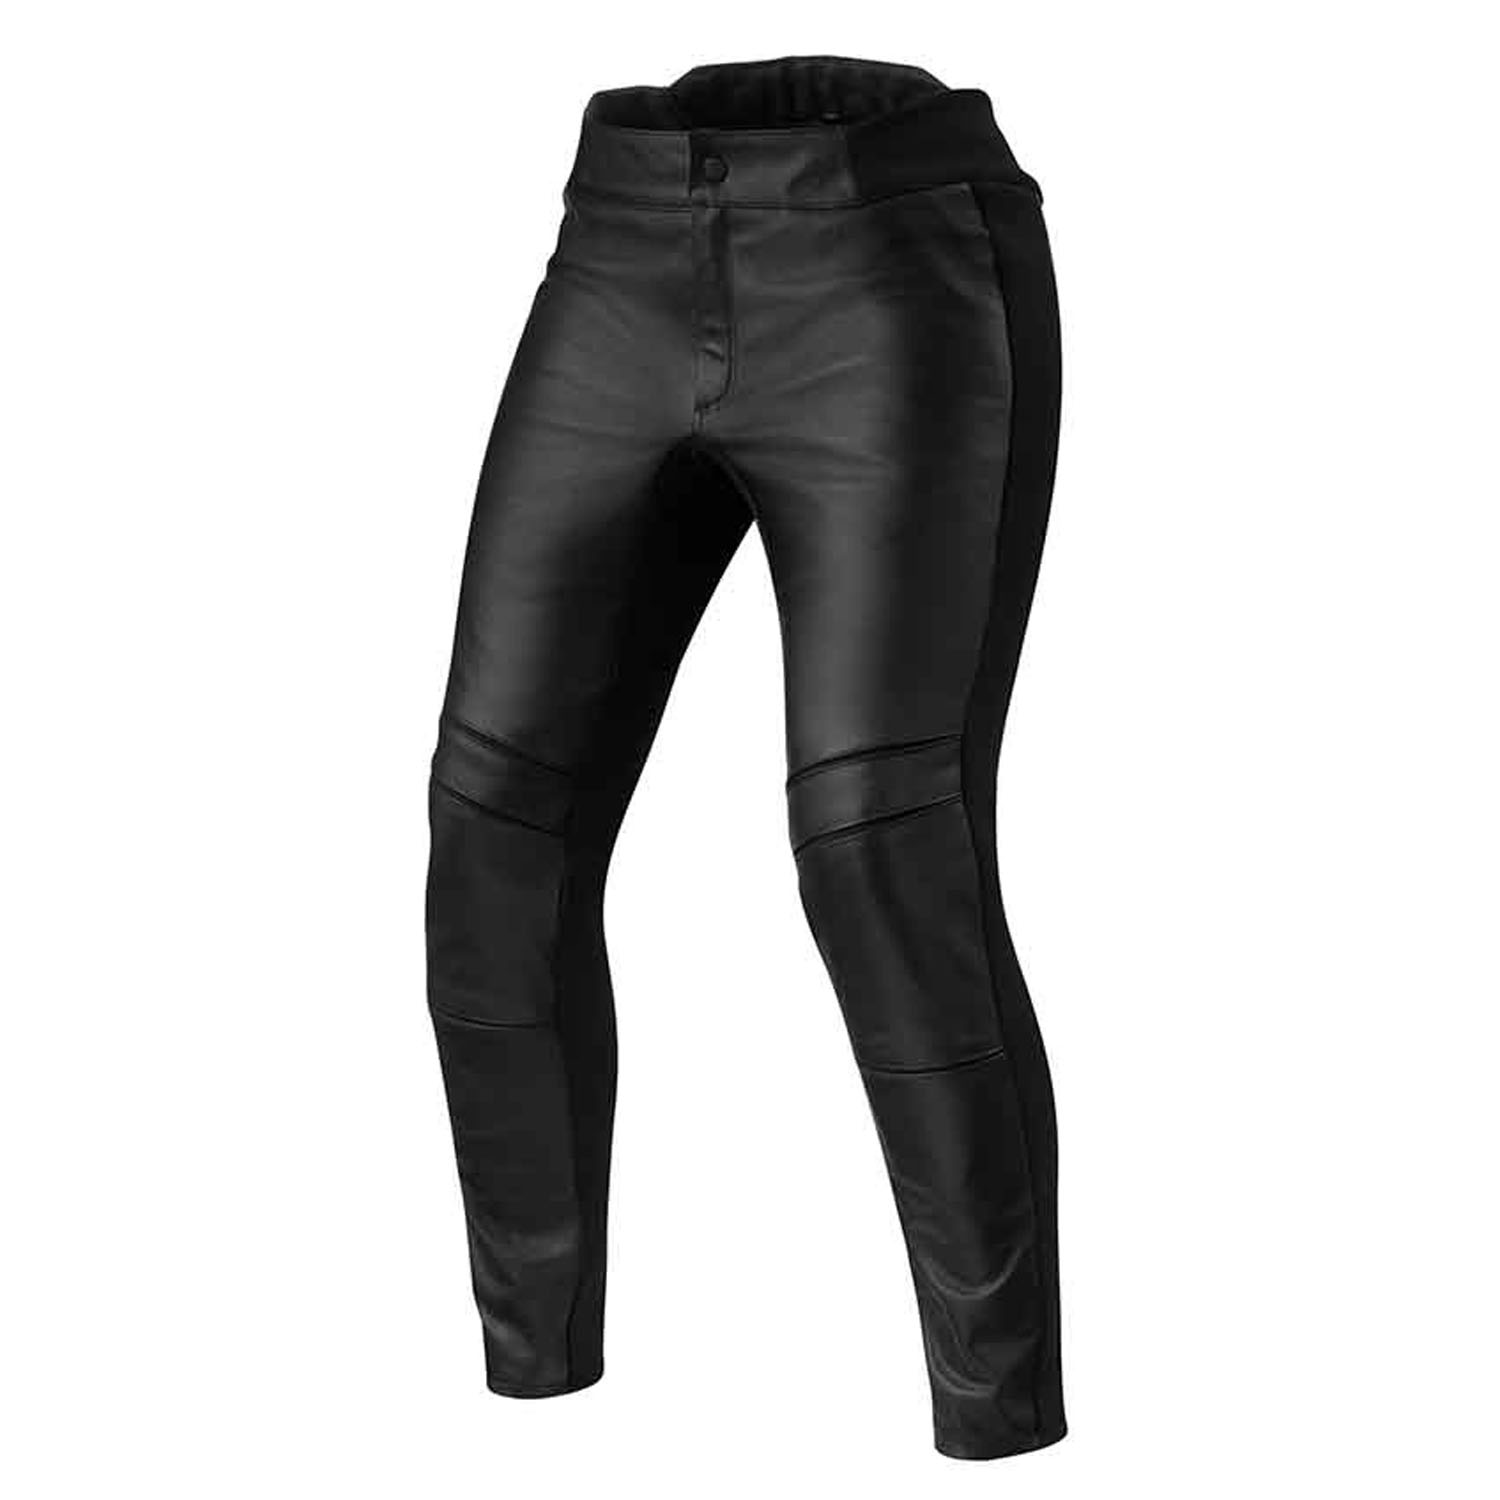 Image of REV'IT! Maci Ladies Black Long Motorcycle Pants Size 42 ID 8700001359214